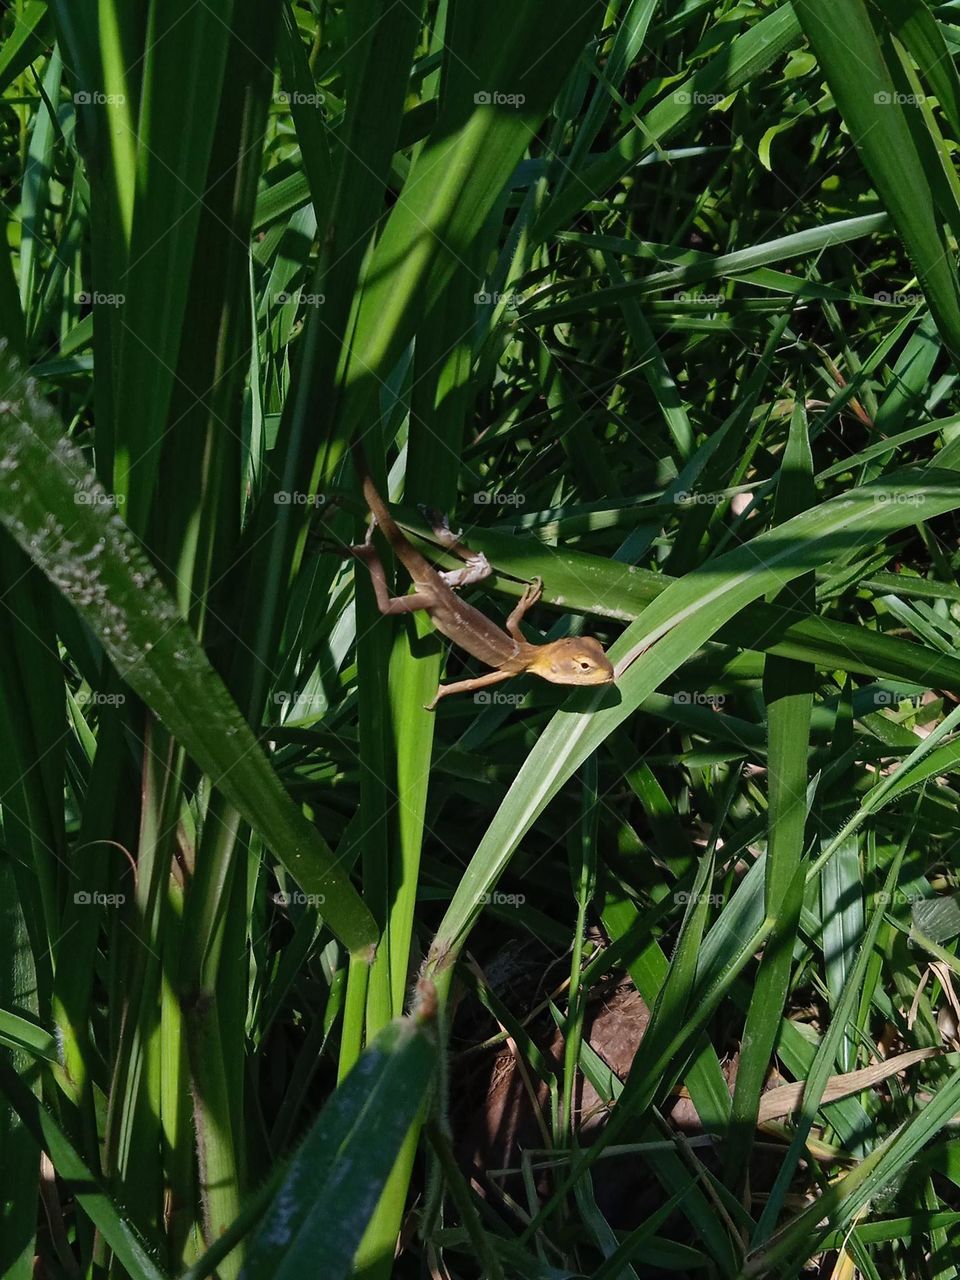 Lizard hanging on the grass.